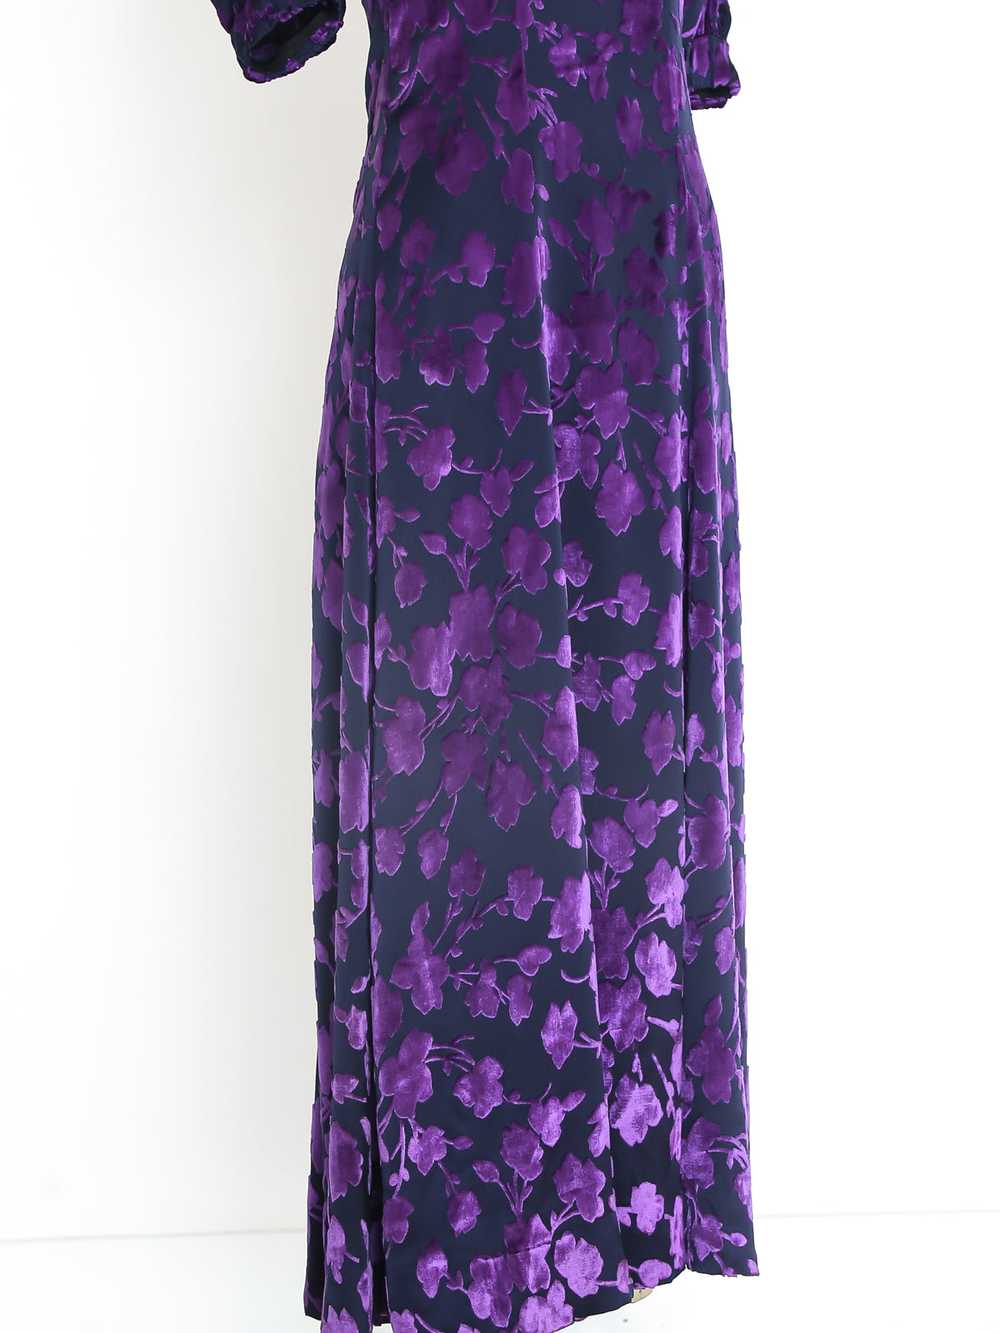 Yves Saint Laurent Amethyst Floral Dress - image 6